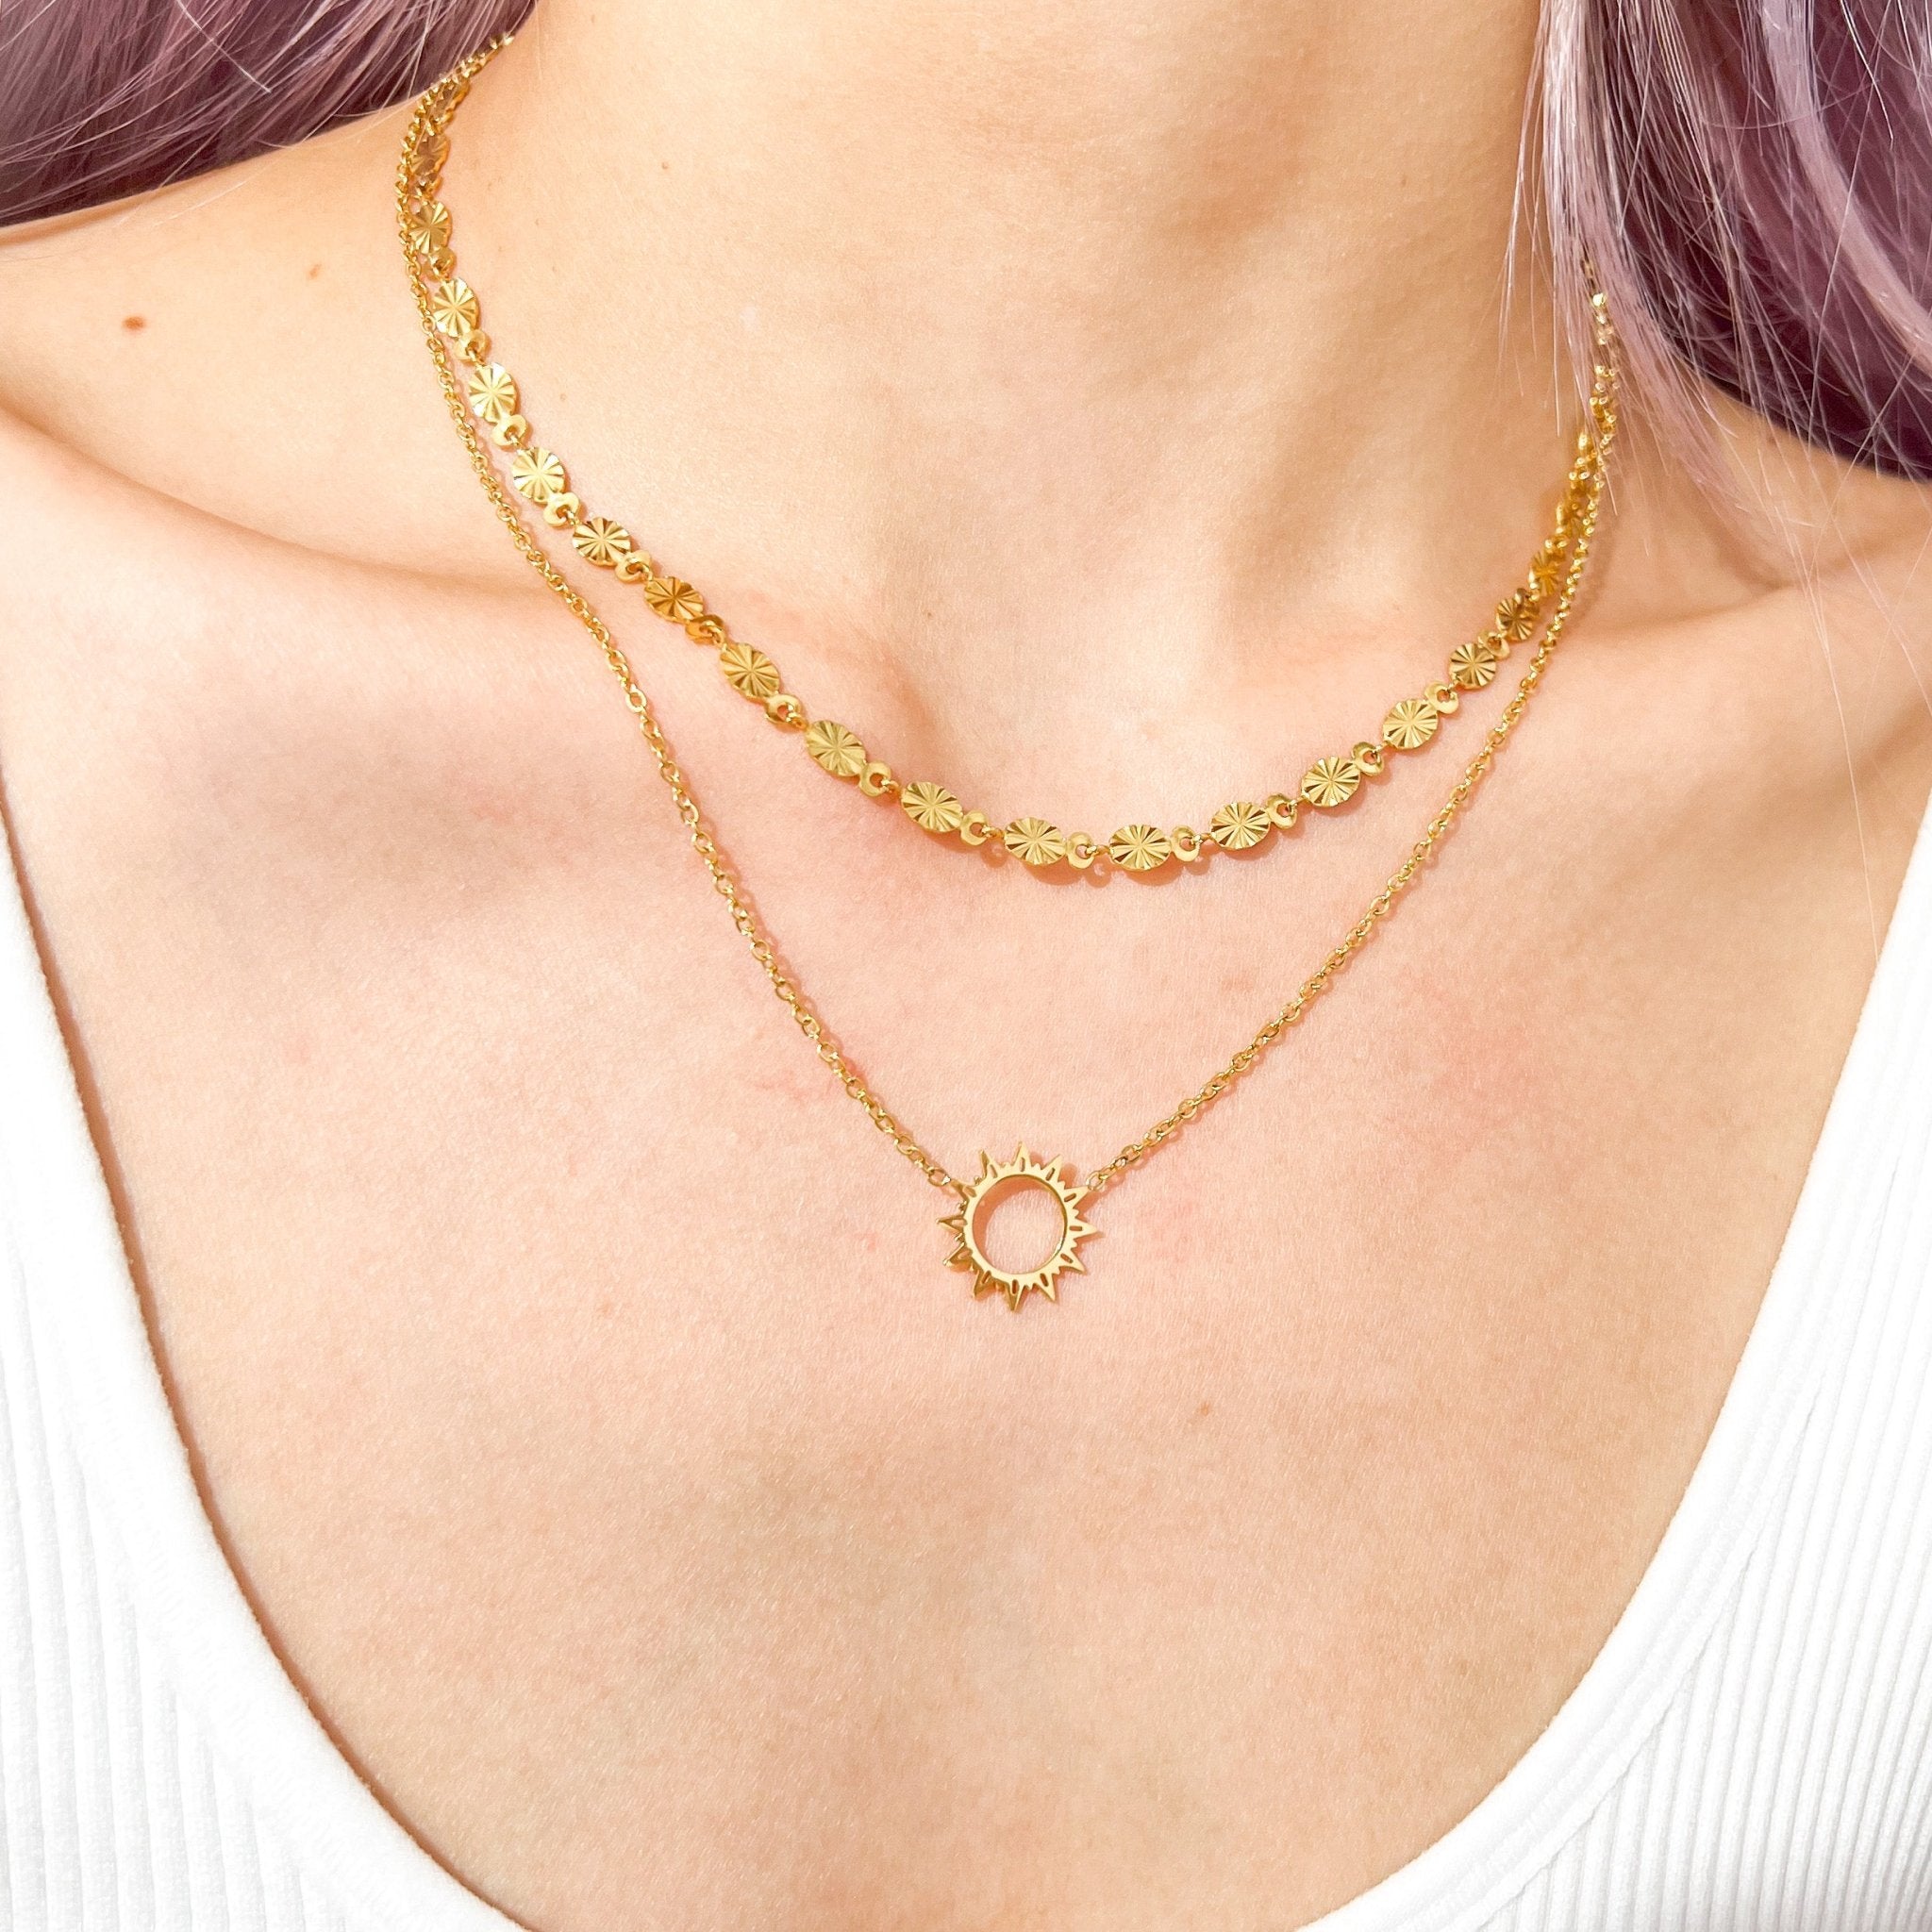 Eva Chain Necklace - Flaire & Co.